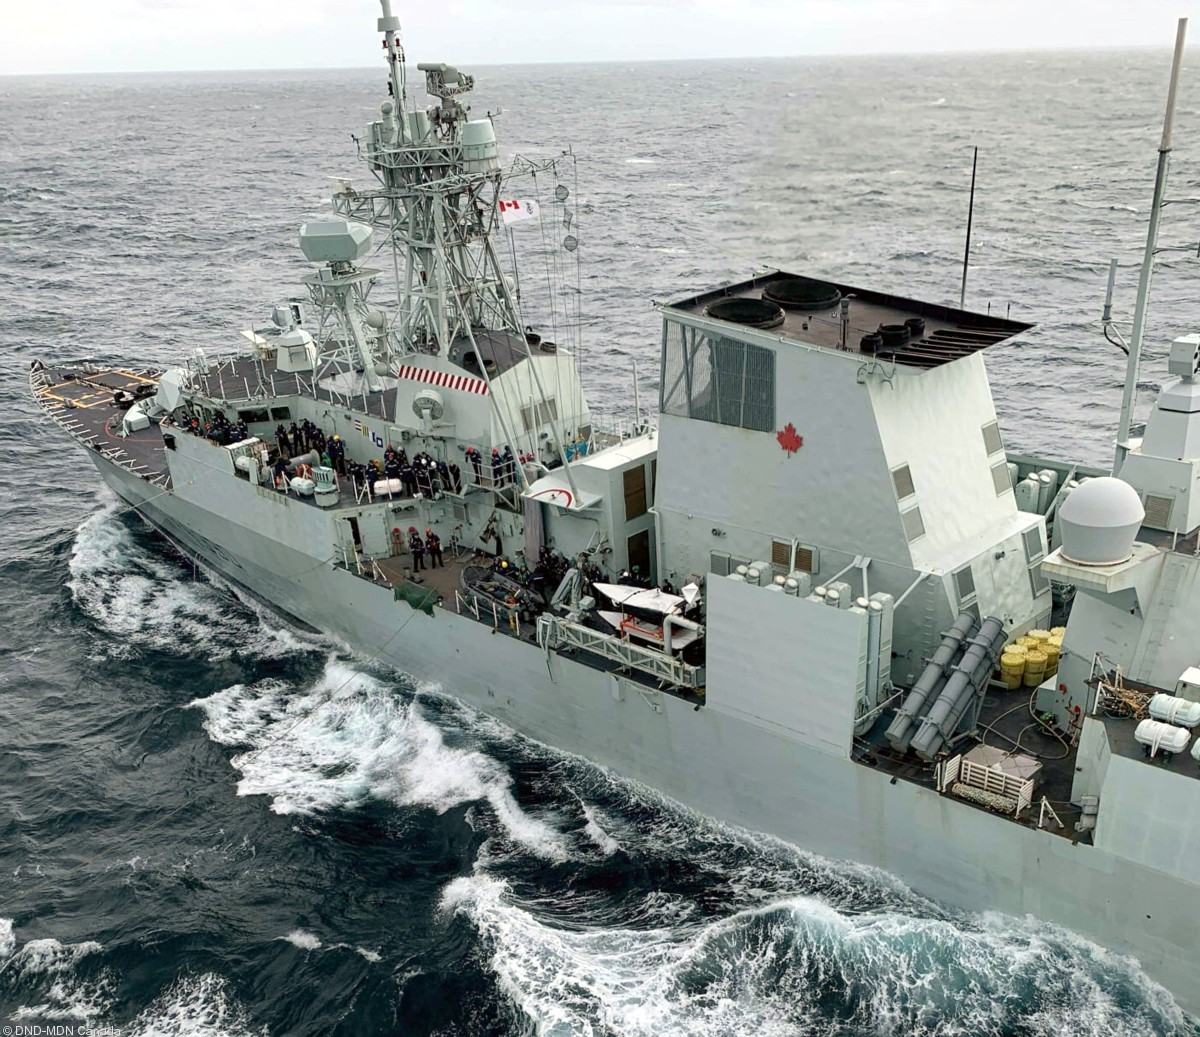 ffh-330 hmcs halifax class helicopter patrol frigate royal canadian navy rcn ncsm marine royale canadienne 32 mk.48 mod.0 vls sea sparrow sam rgm-84 harpoon ssm missile